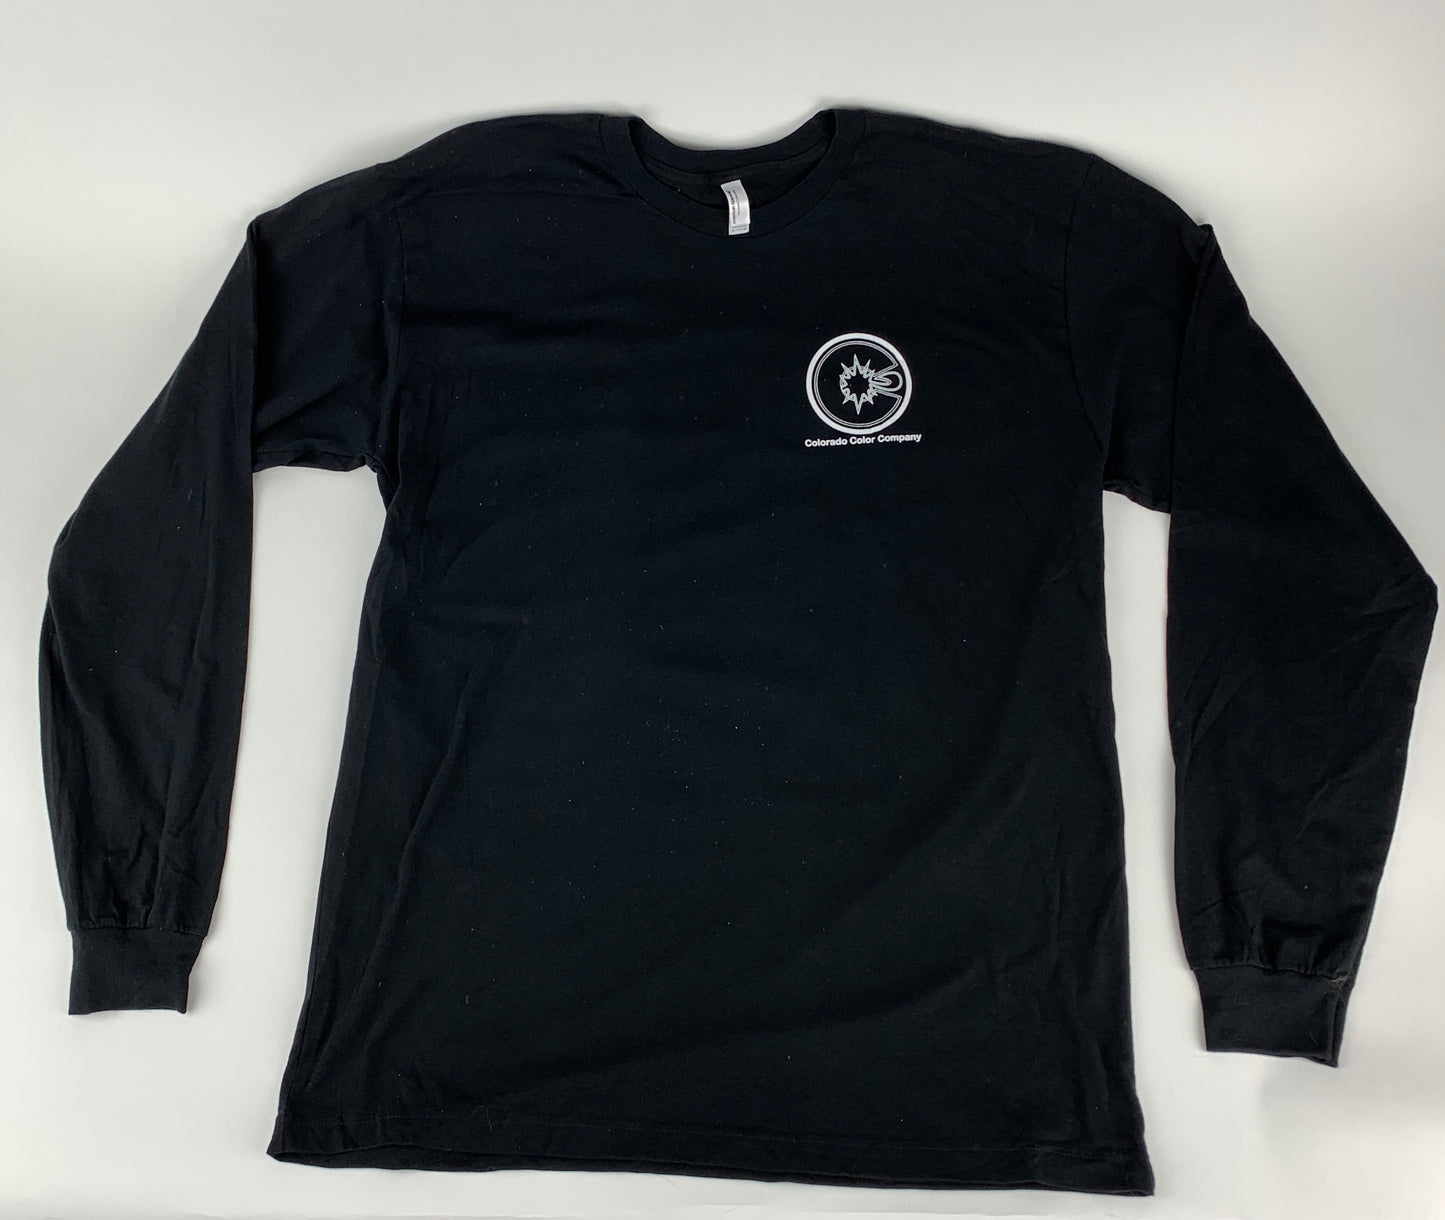 Camiseta negra de manga larga Colorado Color Company - American Apparel